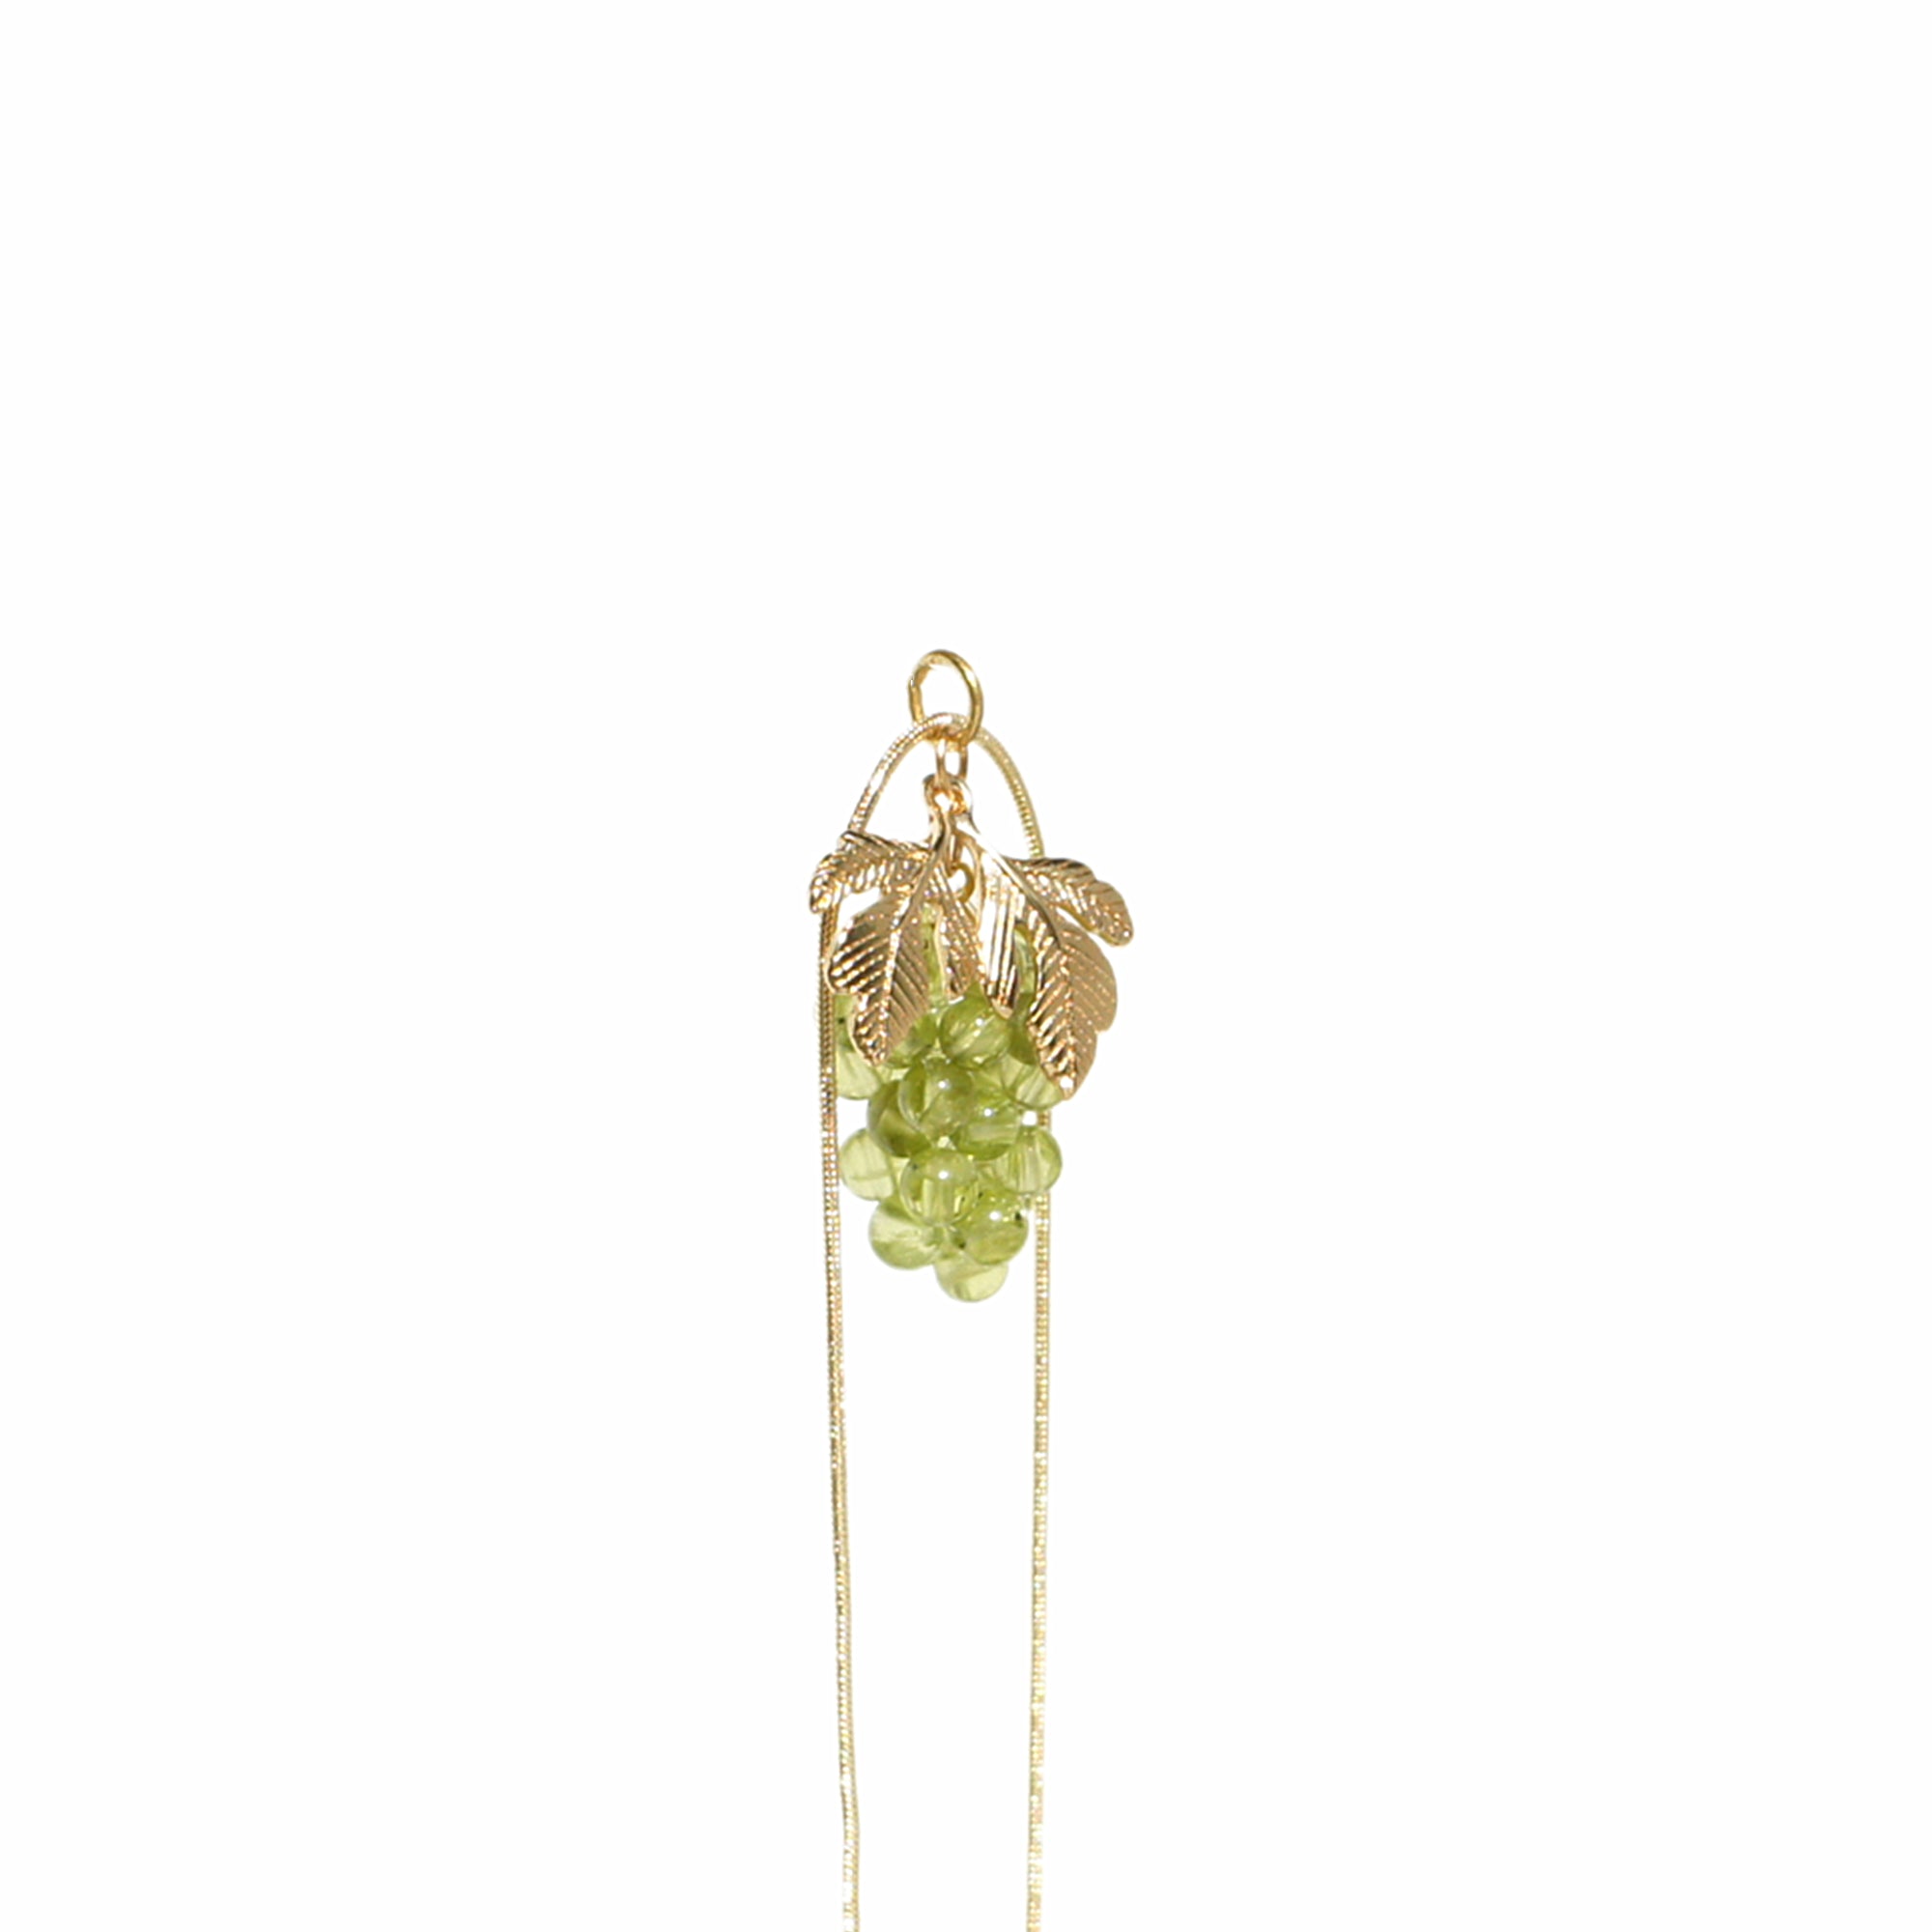 Very Grapeful Gemstone Grape Pendant Necklace